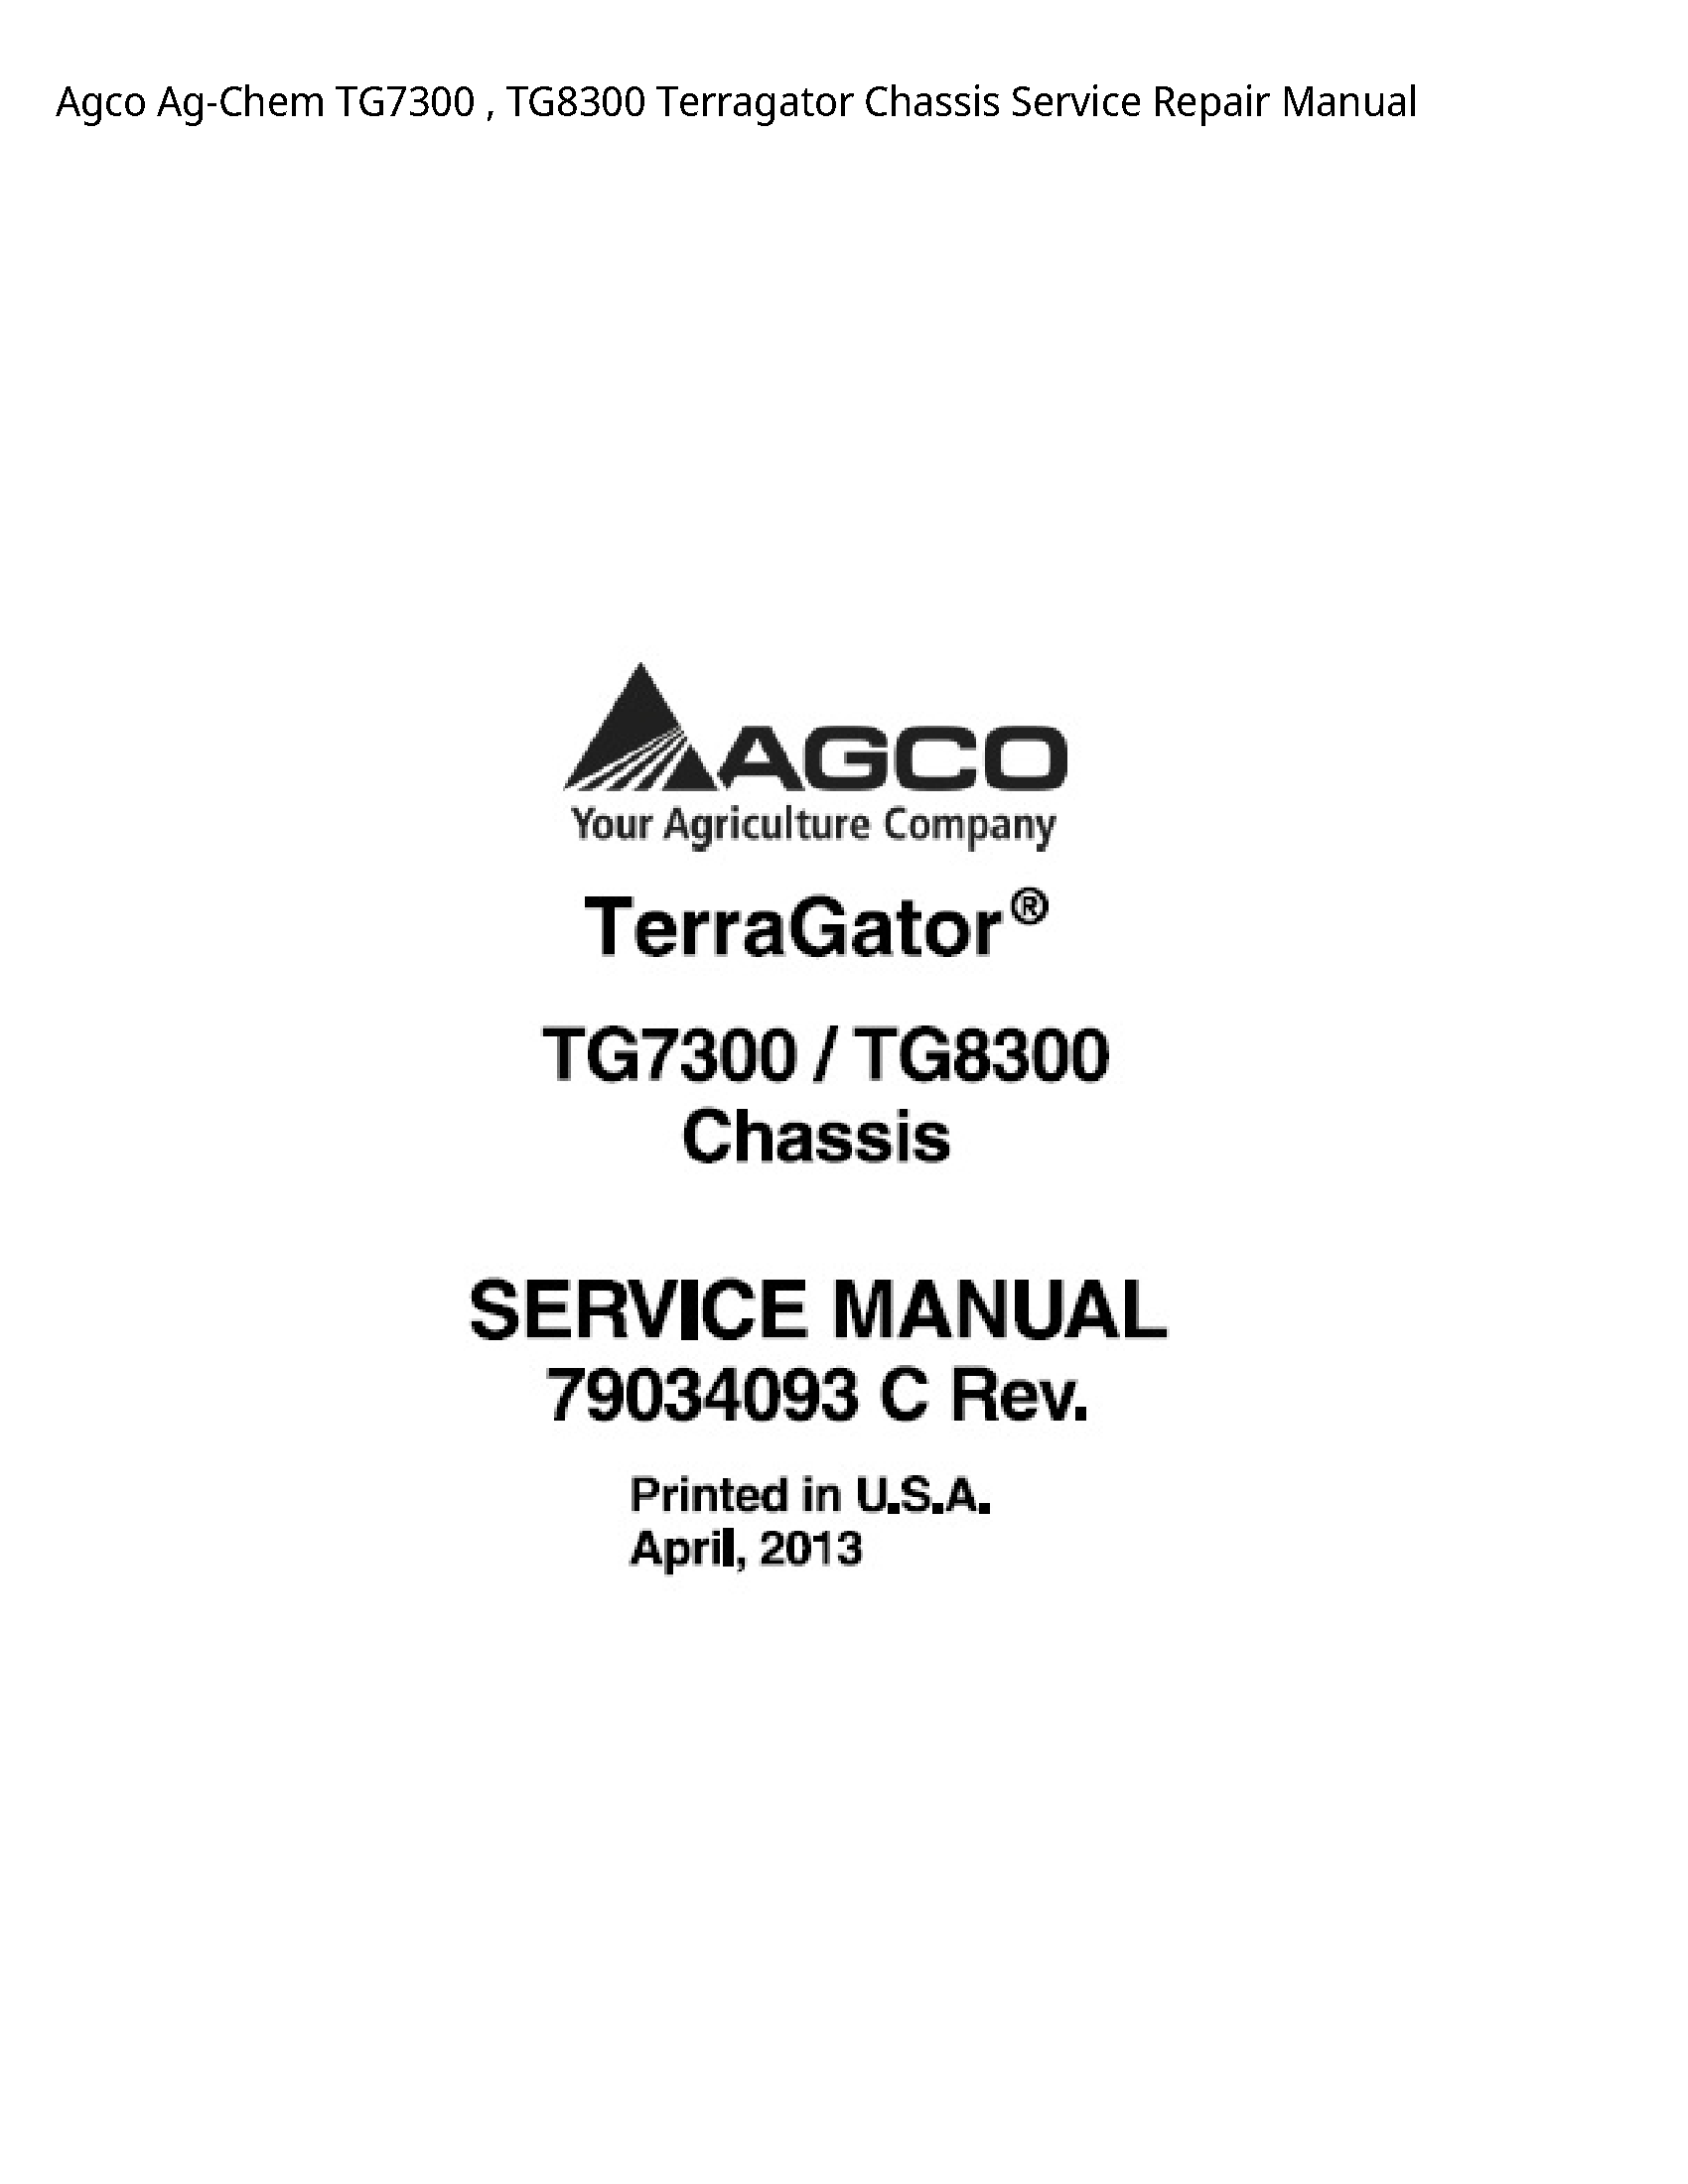 AGCO TG7300 Ag-Chem Terragator Chassis manual